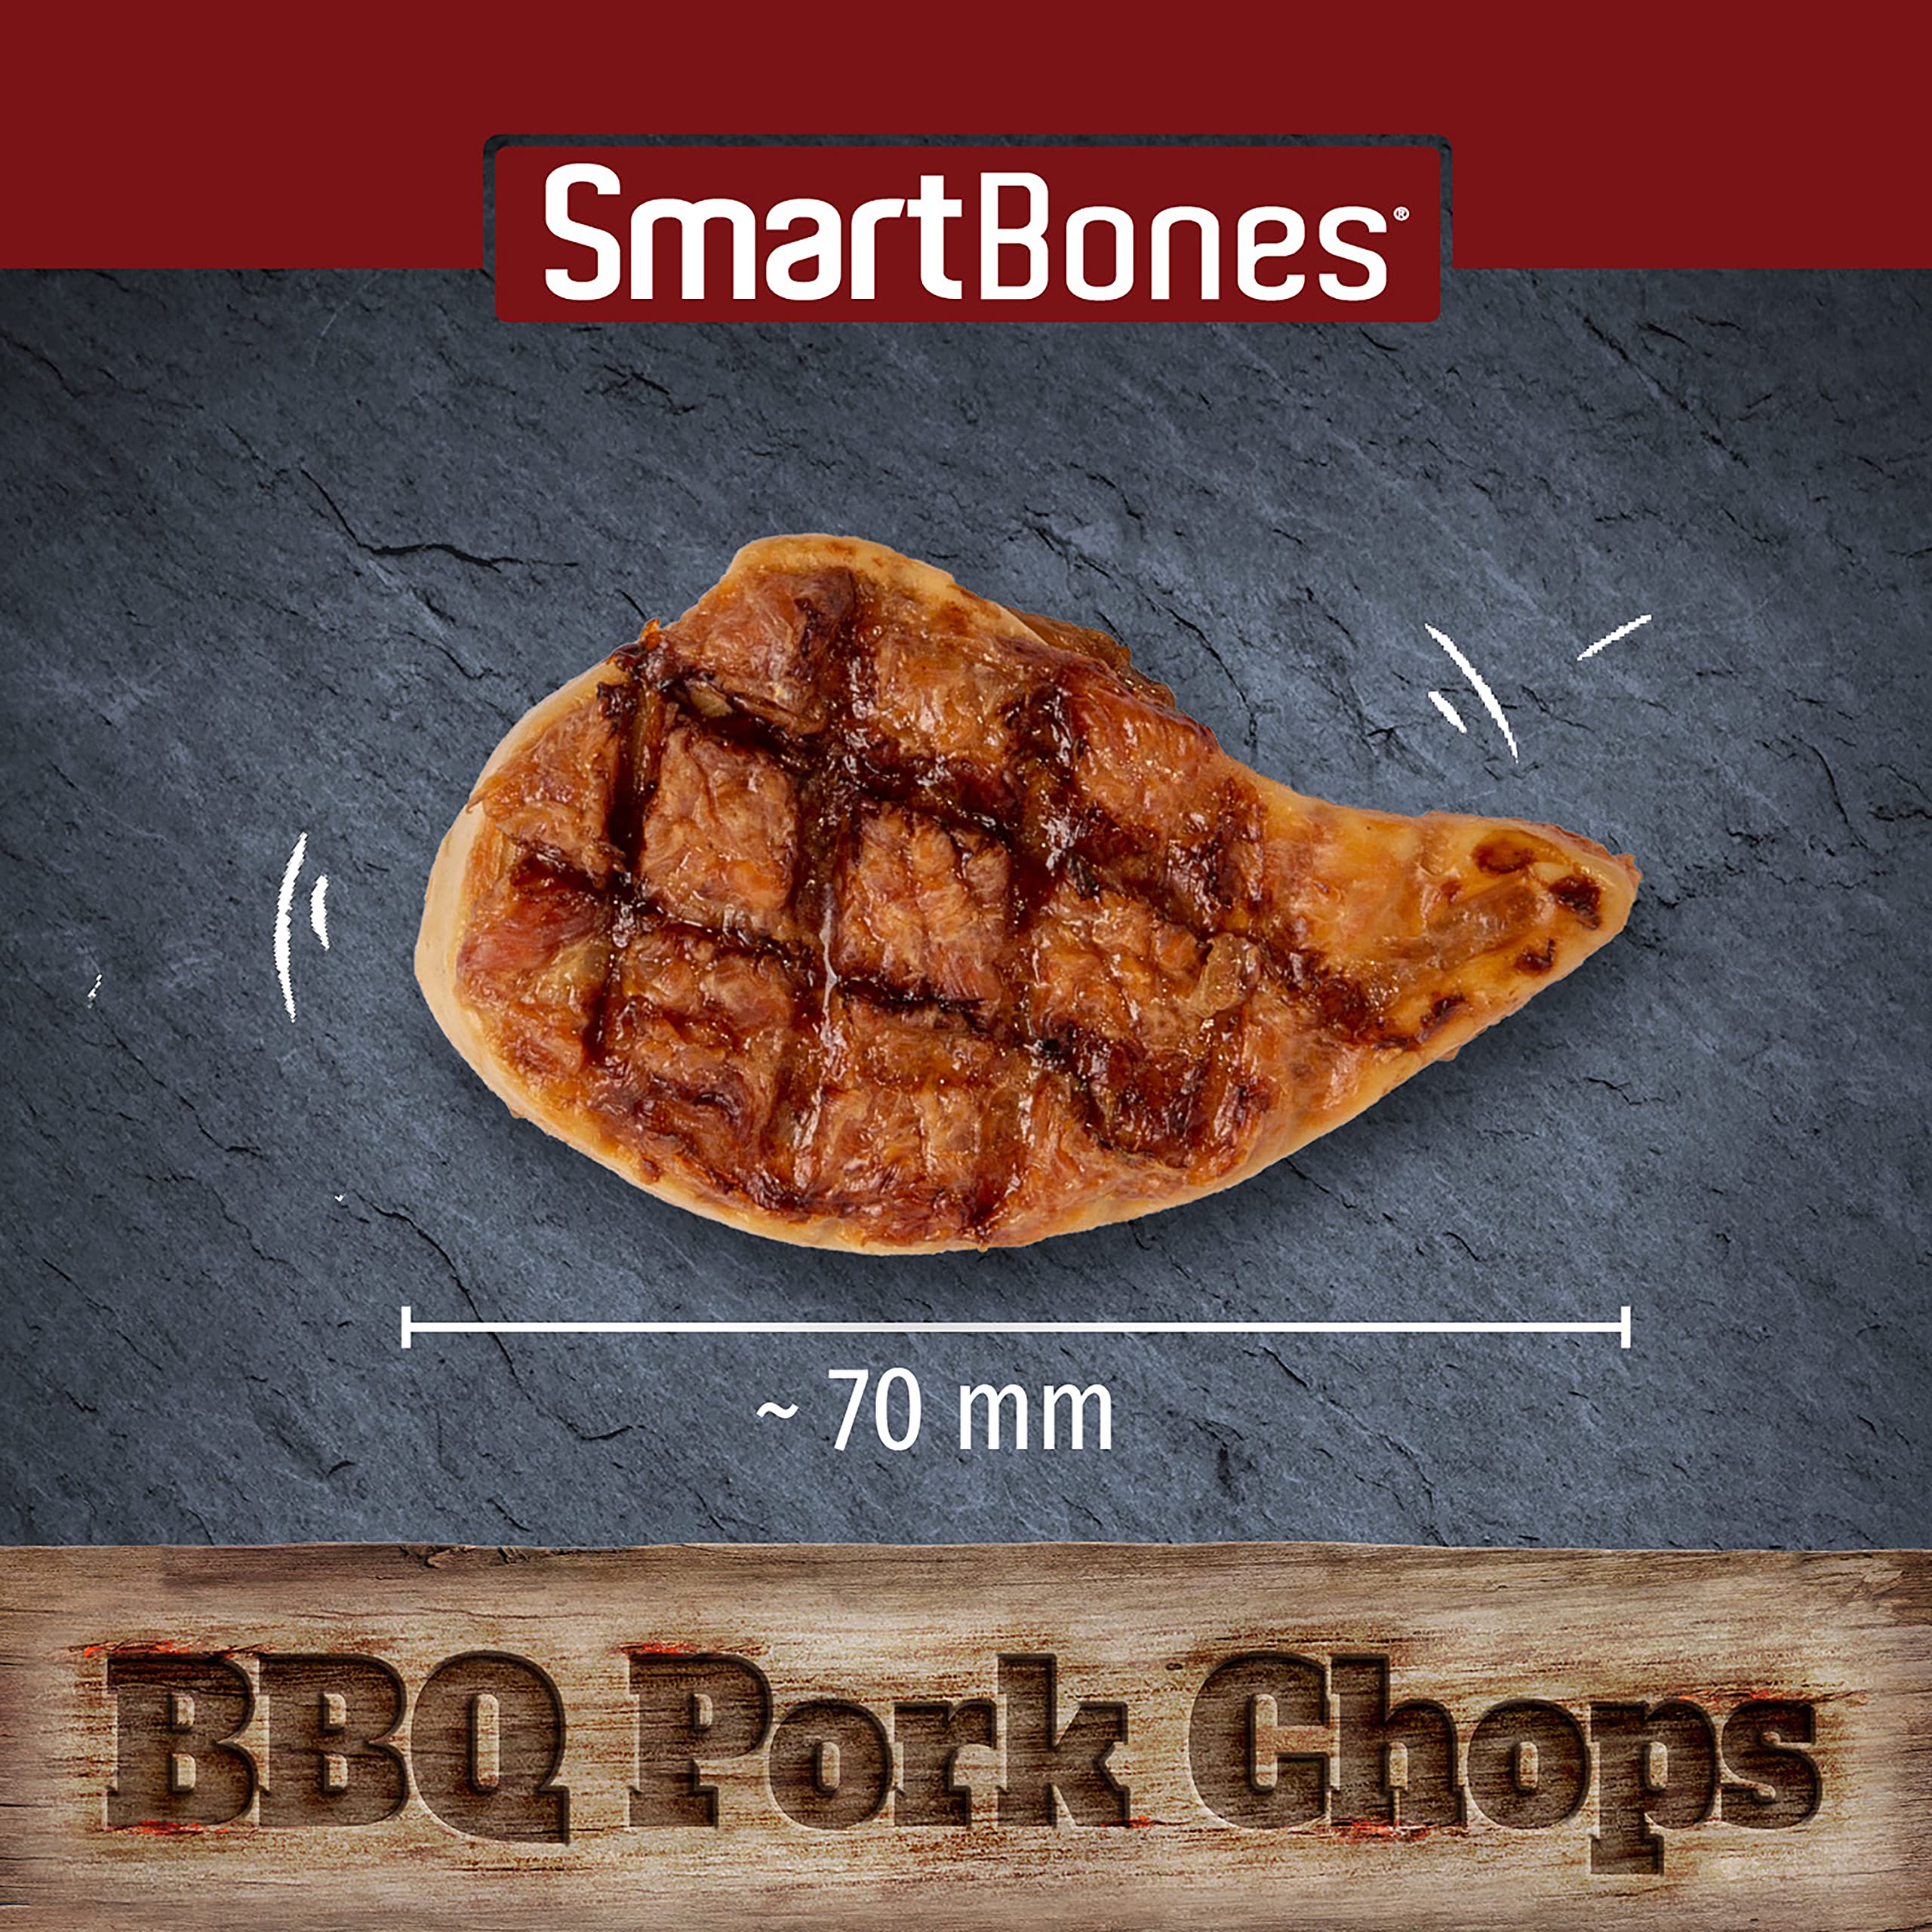 SmartBones BBQ Pork Chops